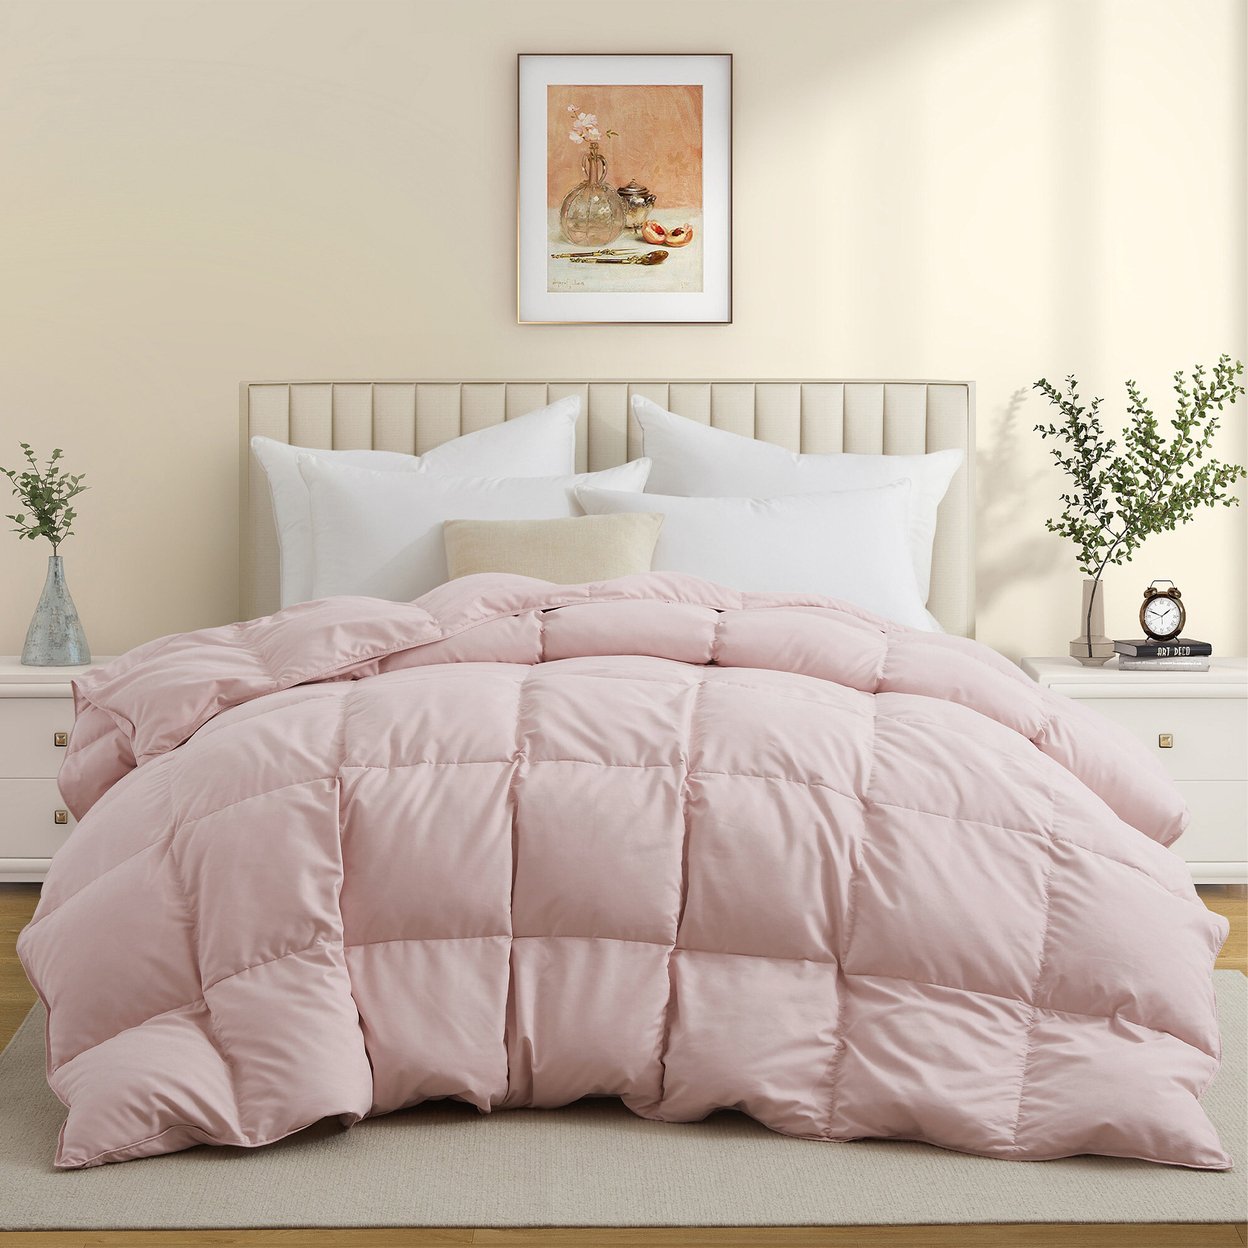 Premium All Seasons White Goose Feather Fiber And Down Comforter - Lotus Pink, Cal King